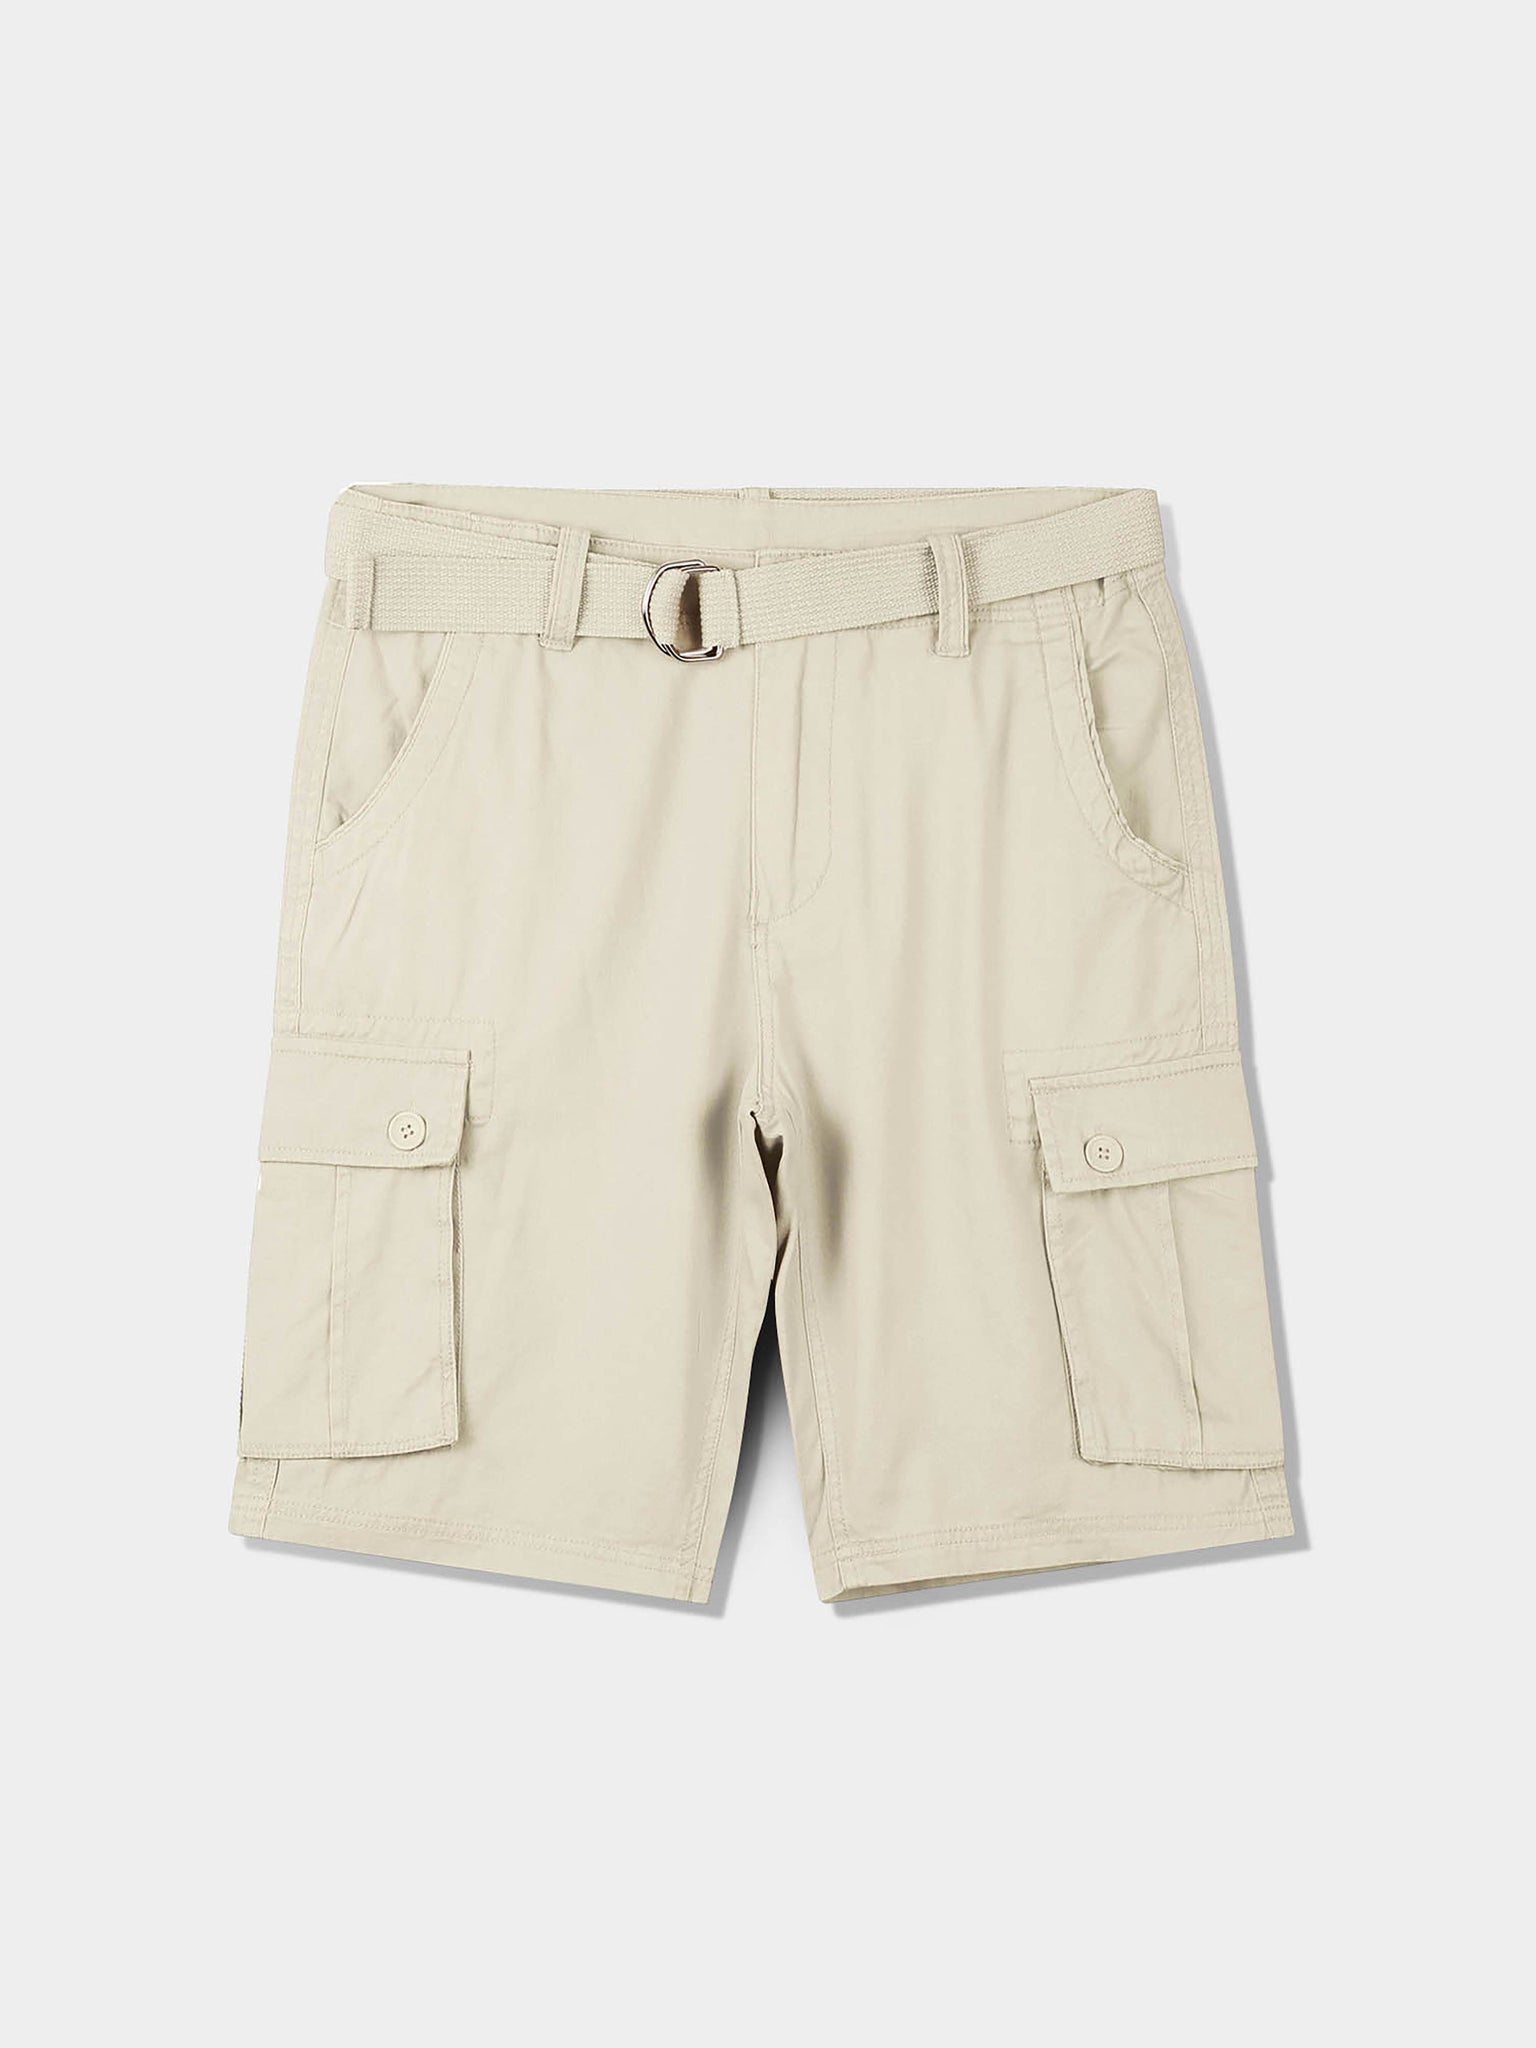 Men's Cargo Shorts with Belt